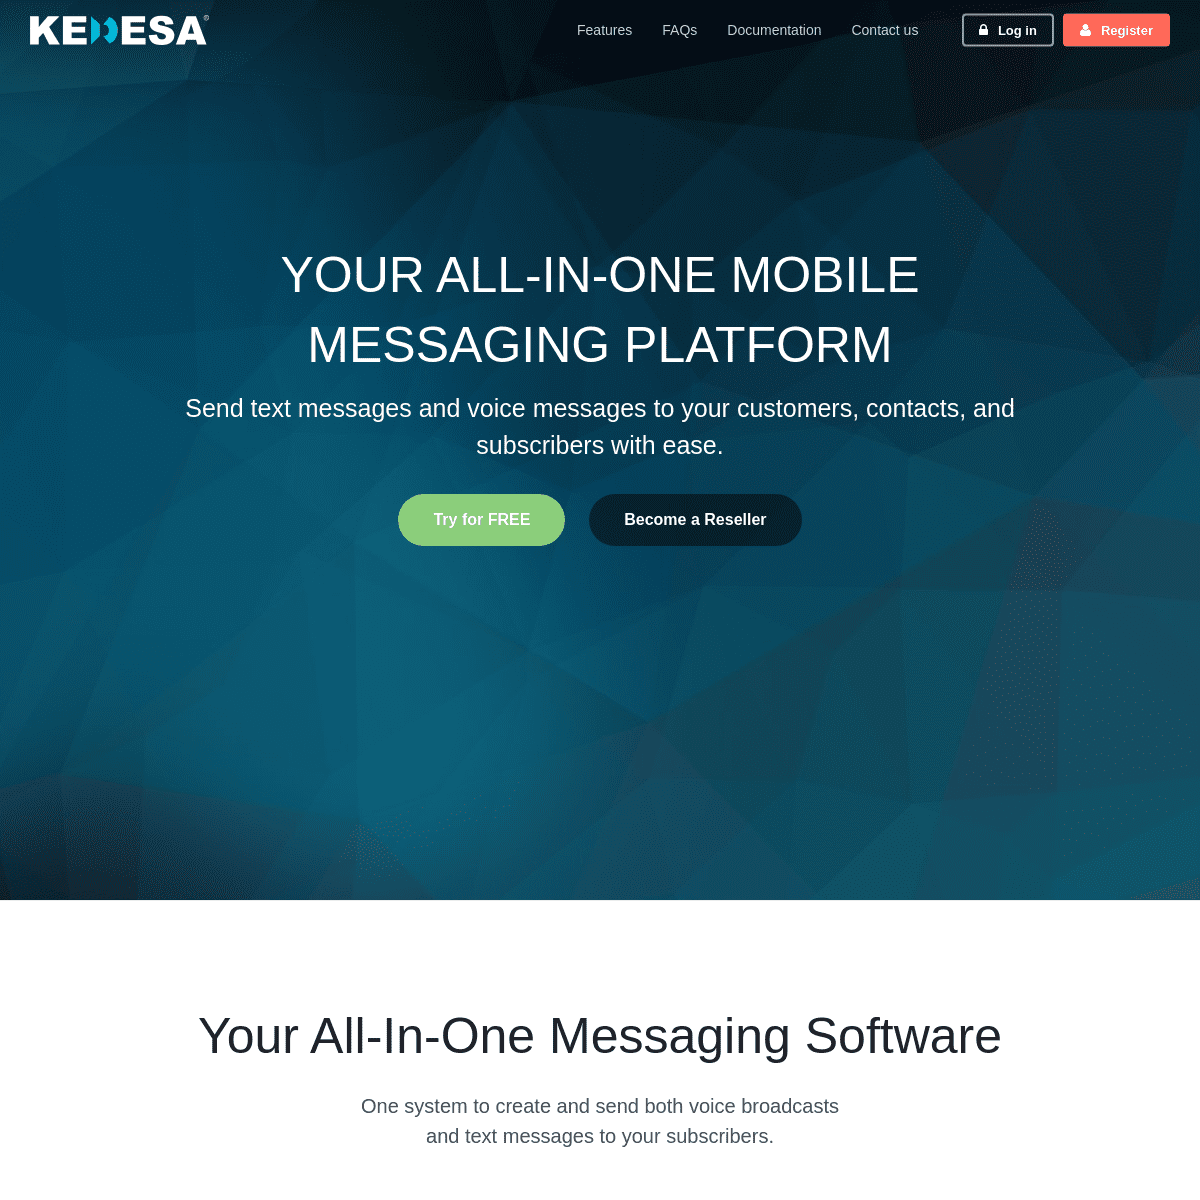 A complete backup of kedesa.com